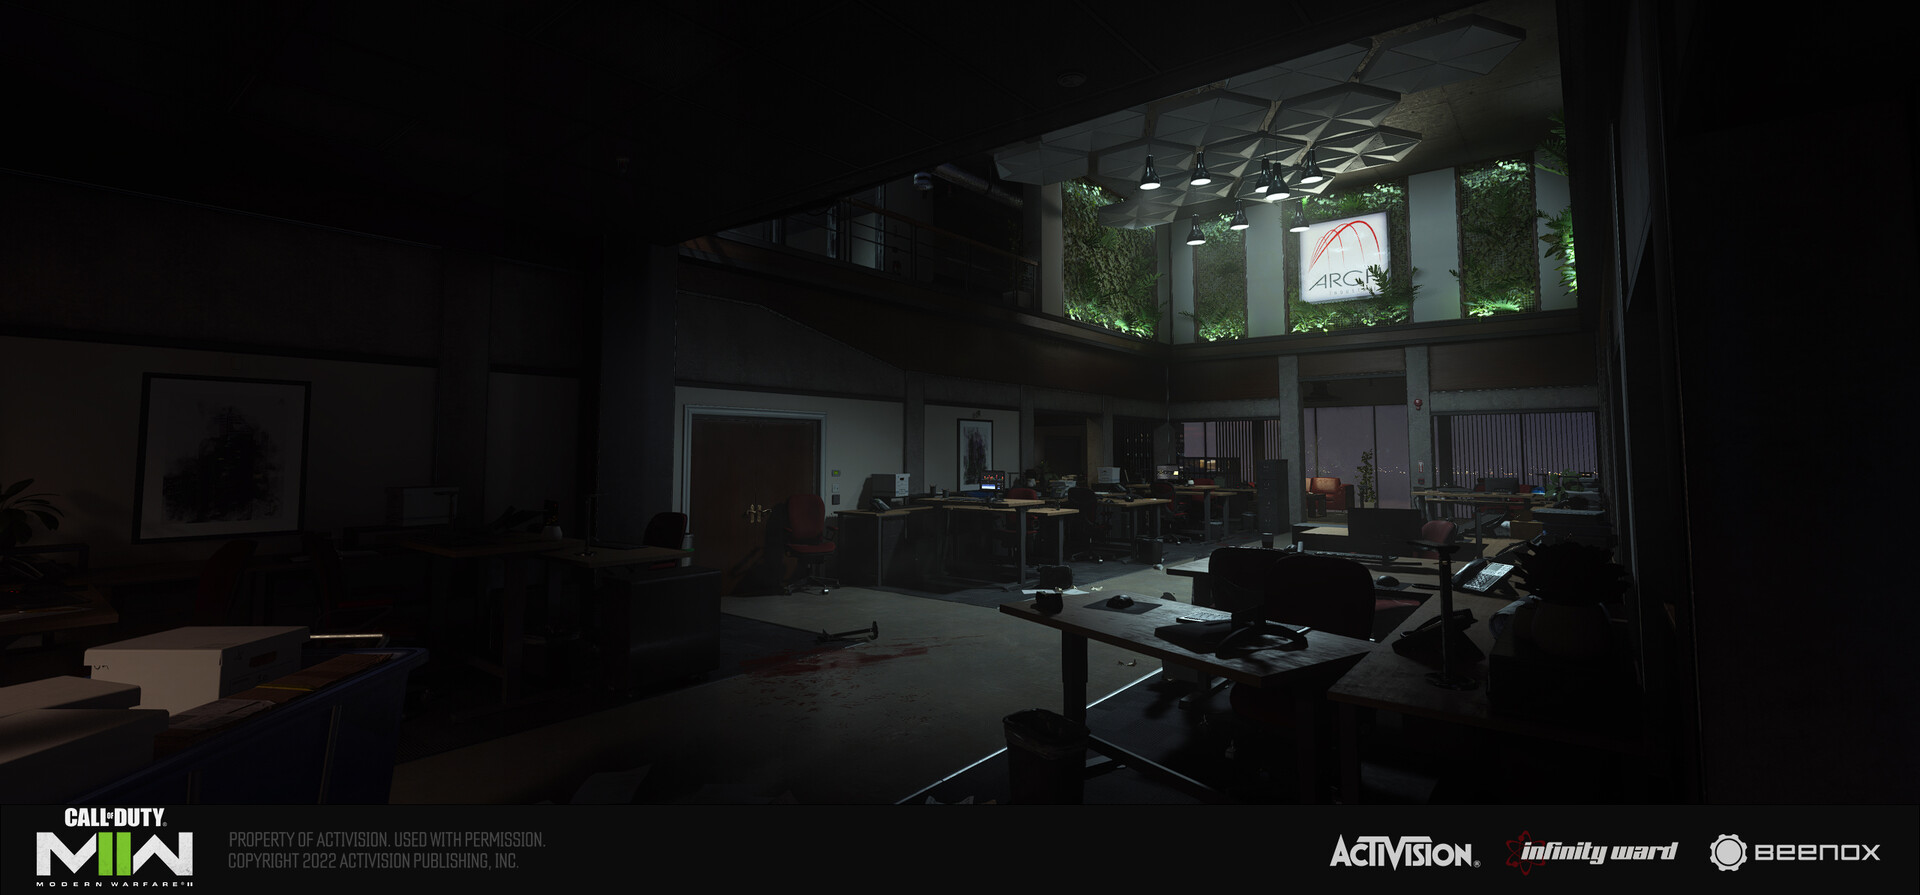 ArtStation - Call of Duty: Modern warfare 2 Remastered : Lighting